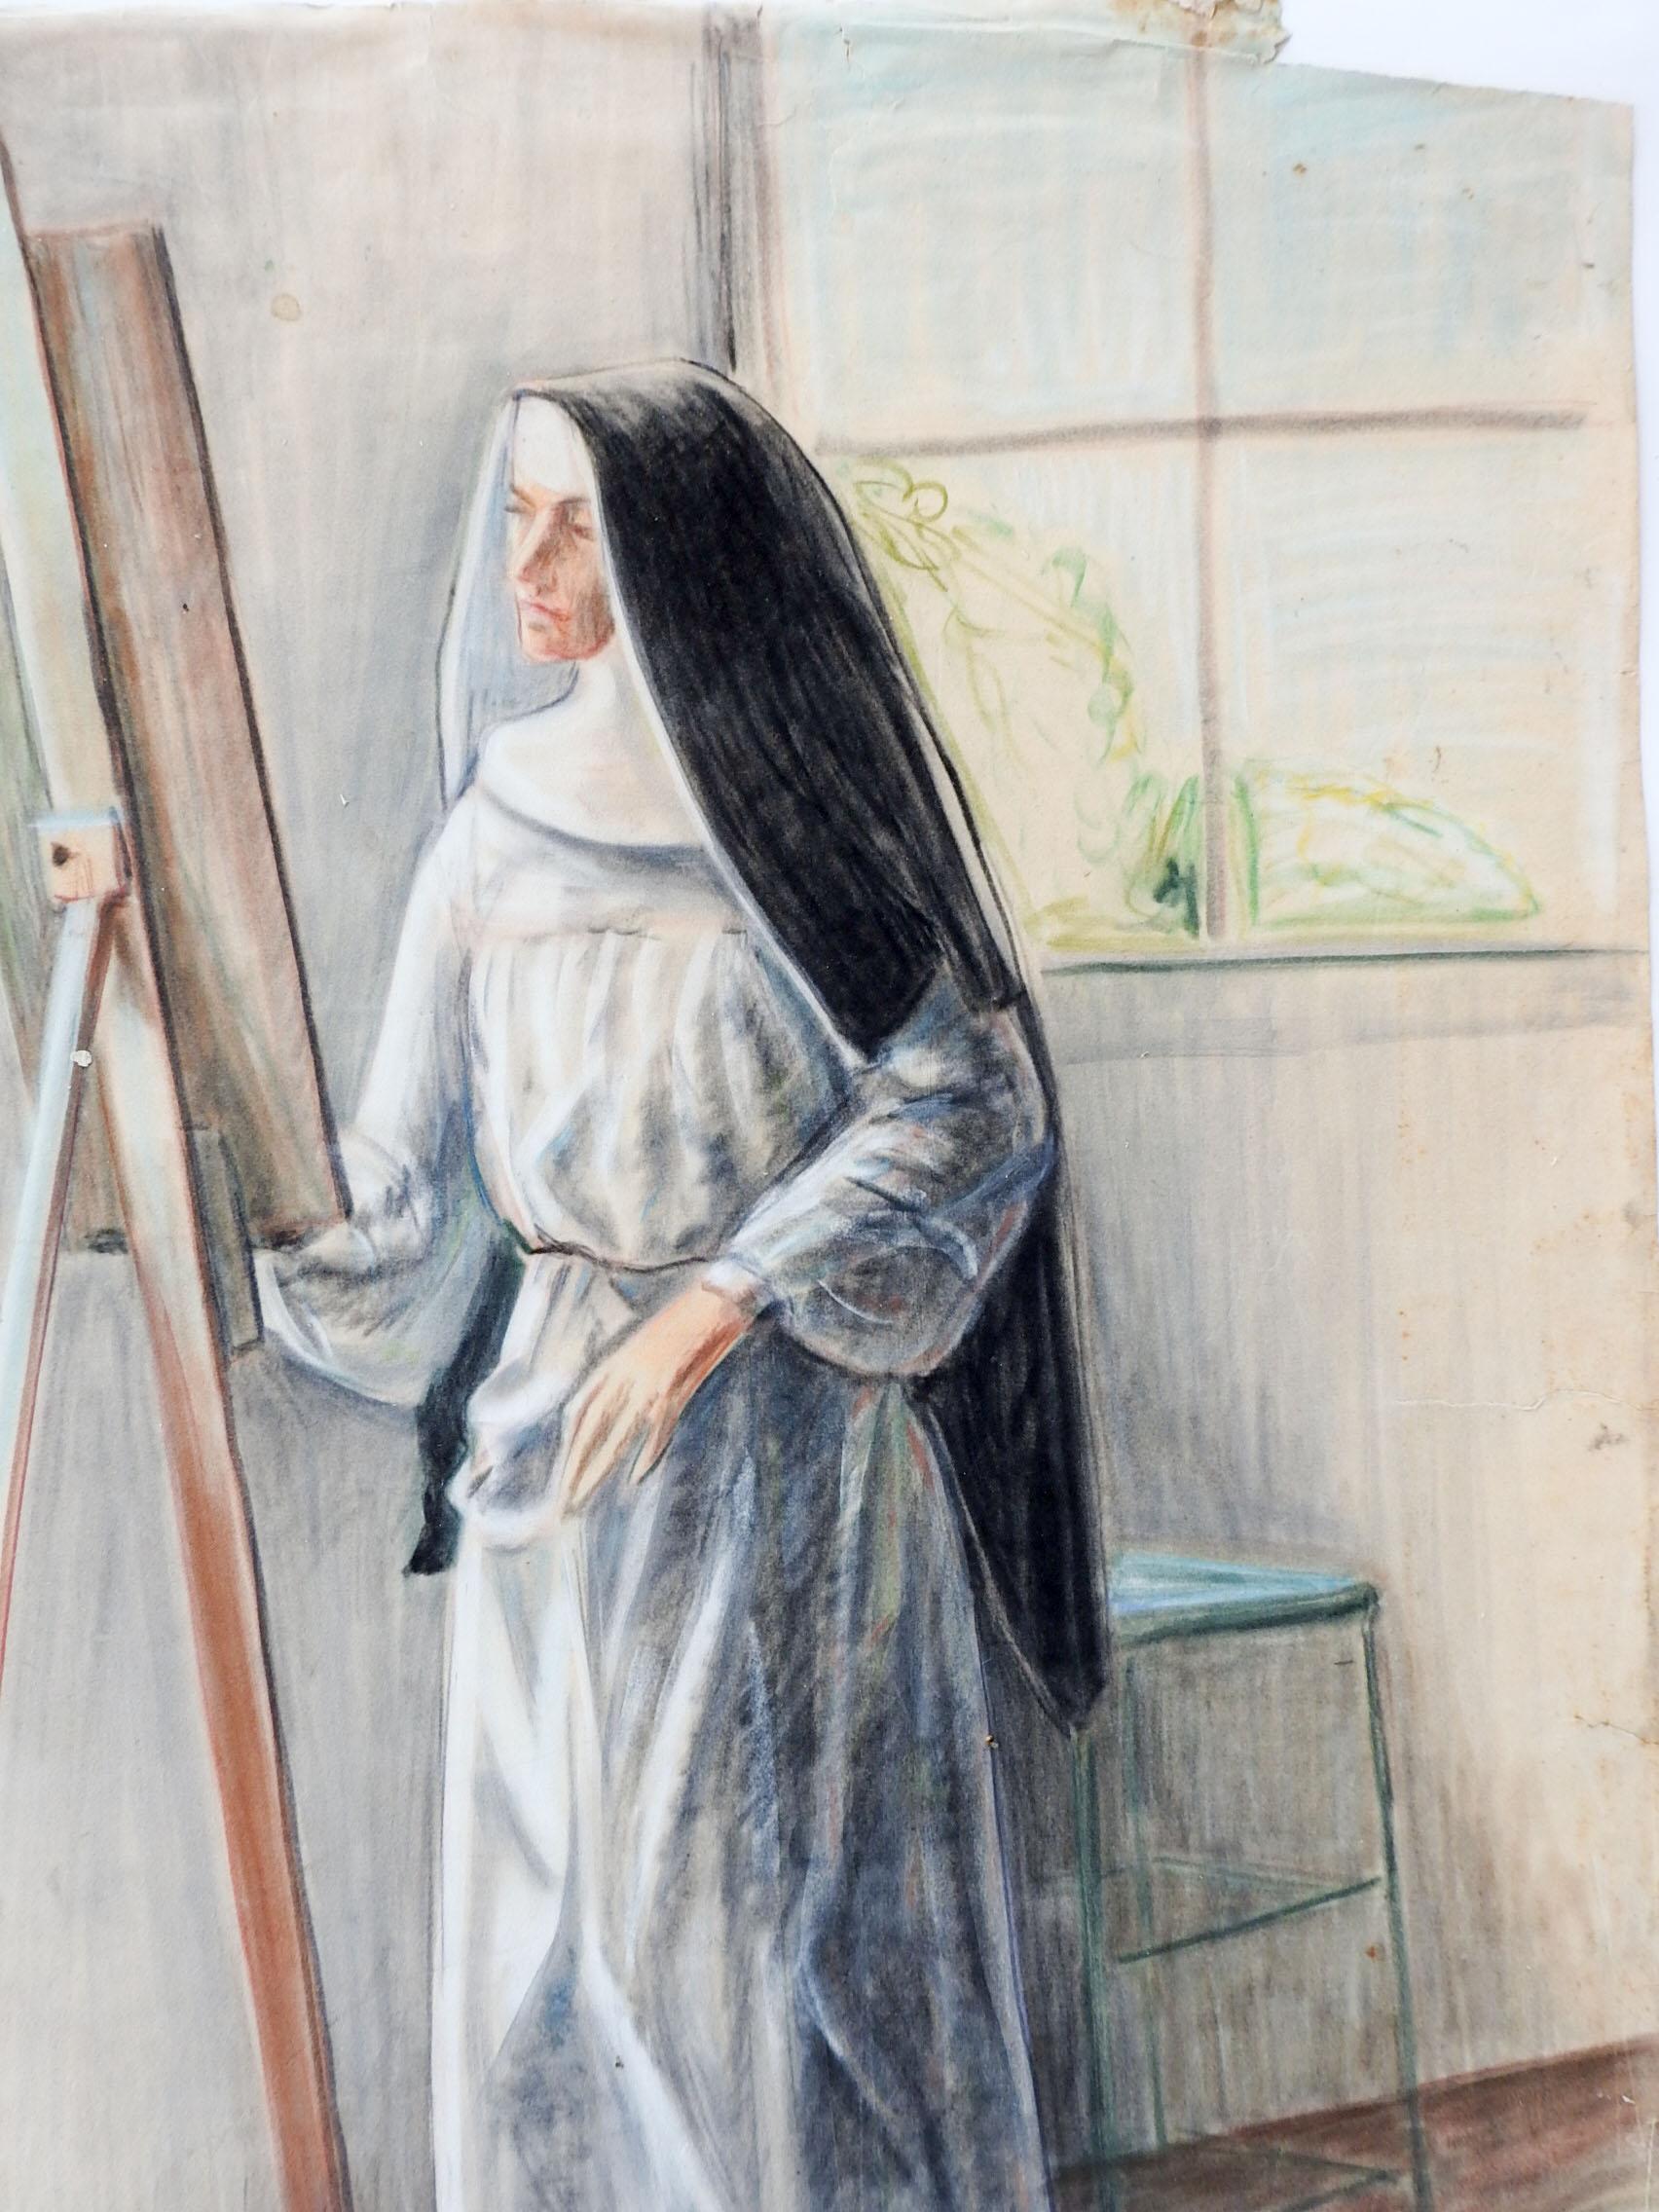 nun painting